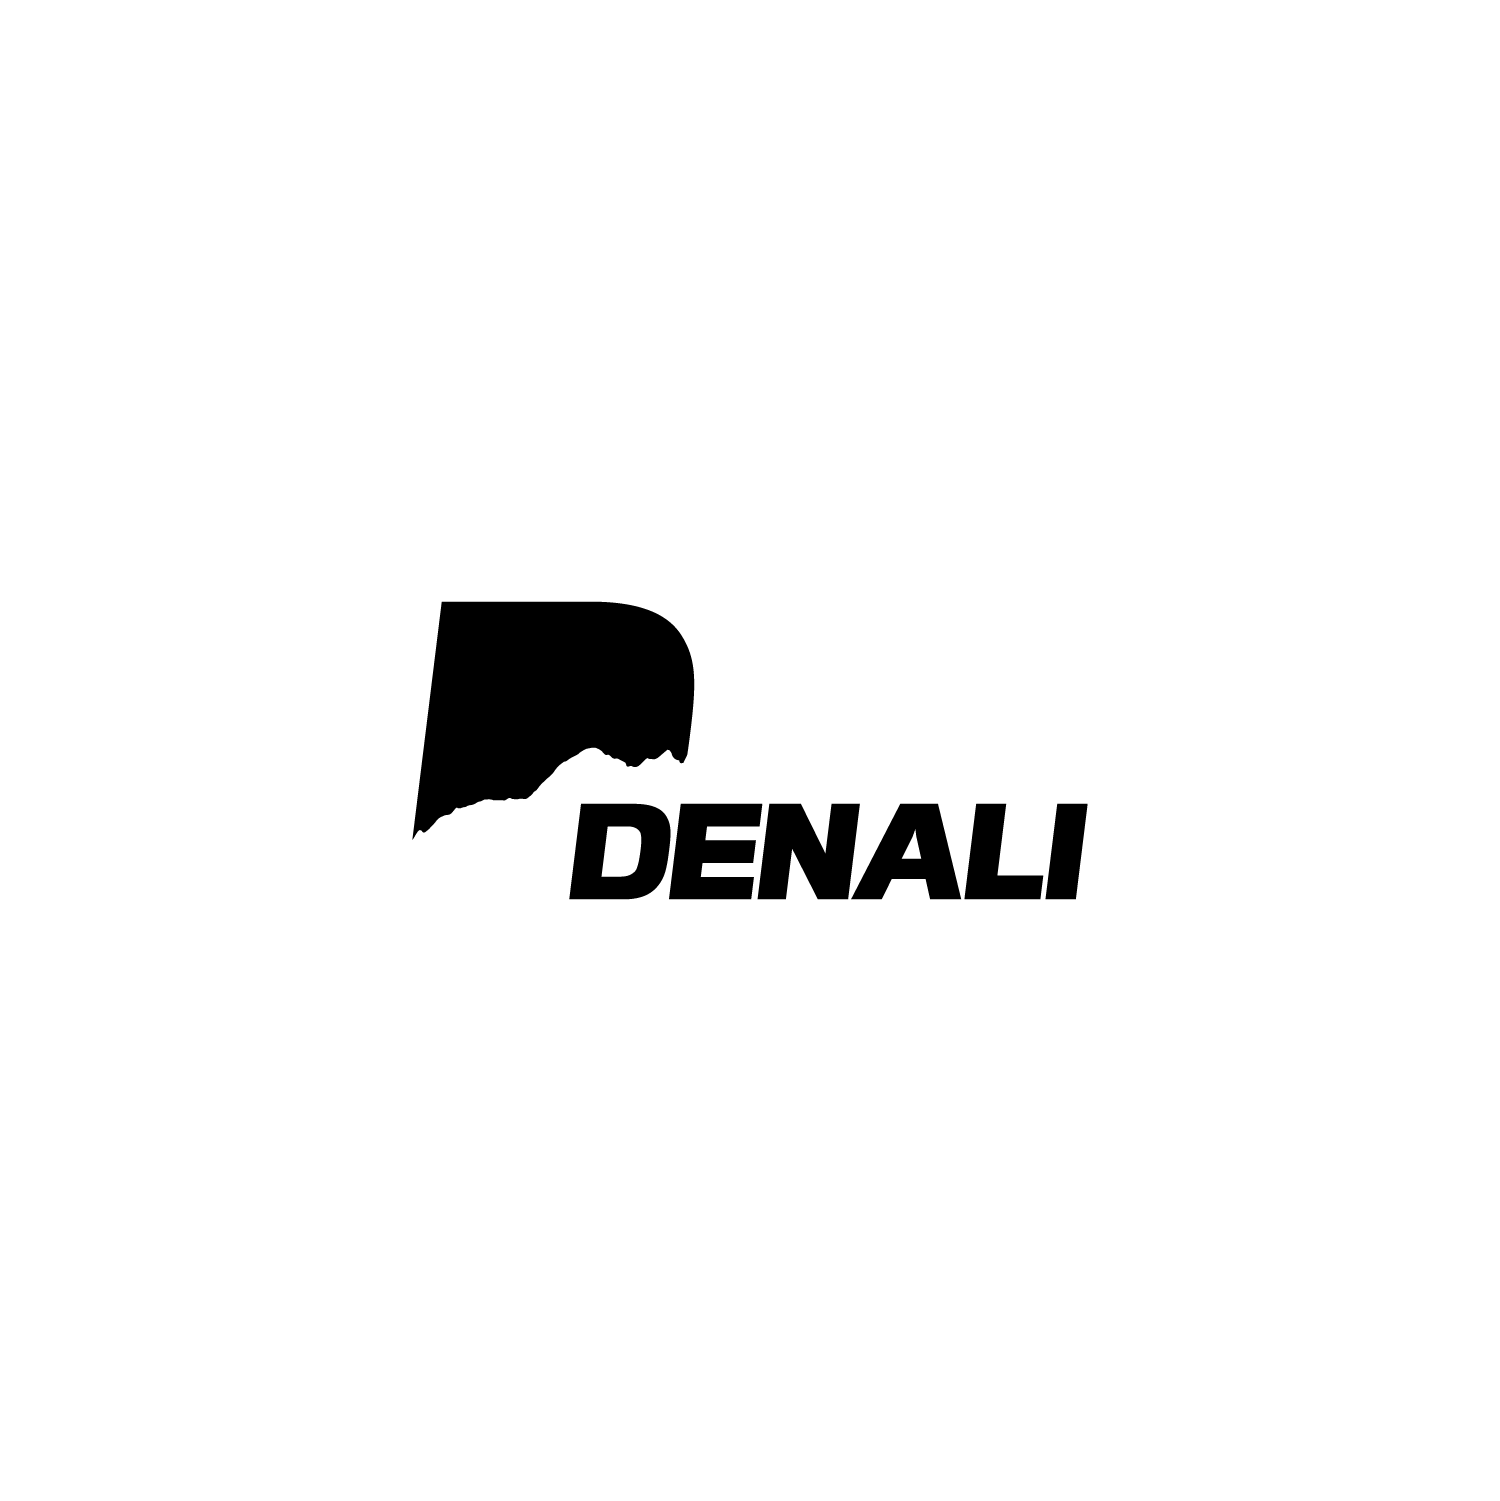 Denali Outdoors logo by OLSON MCINTYRE